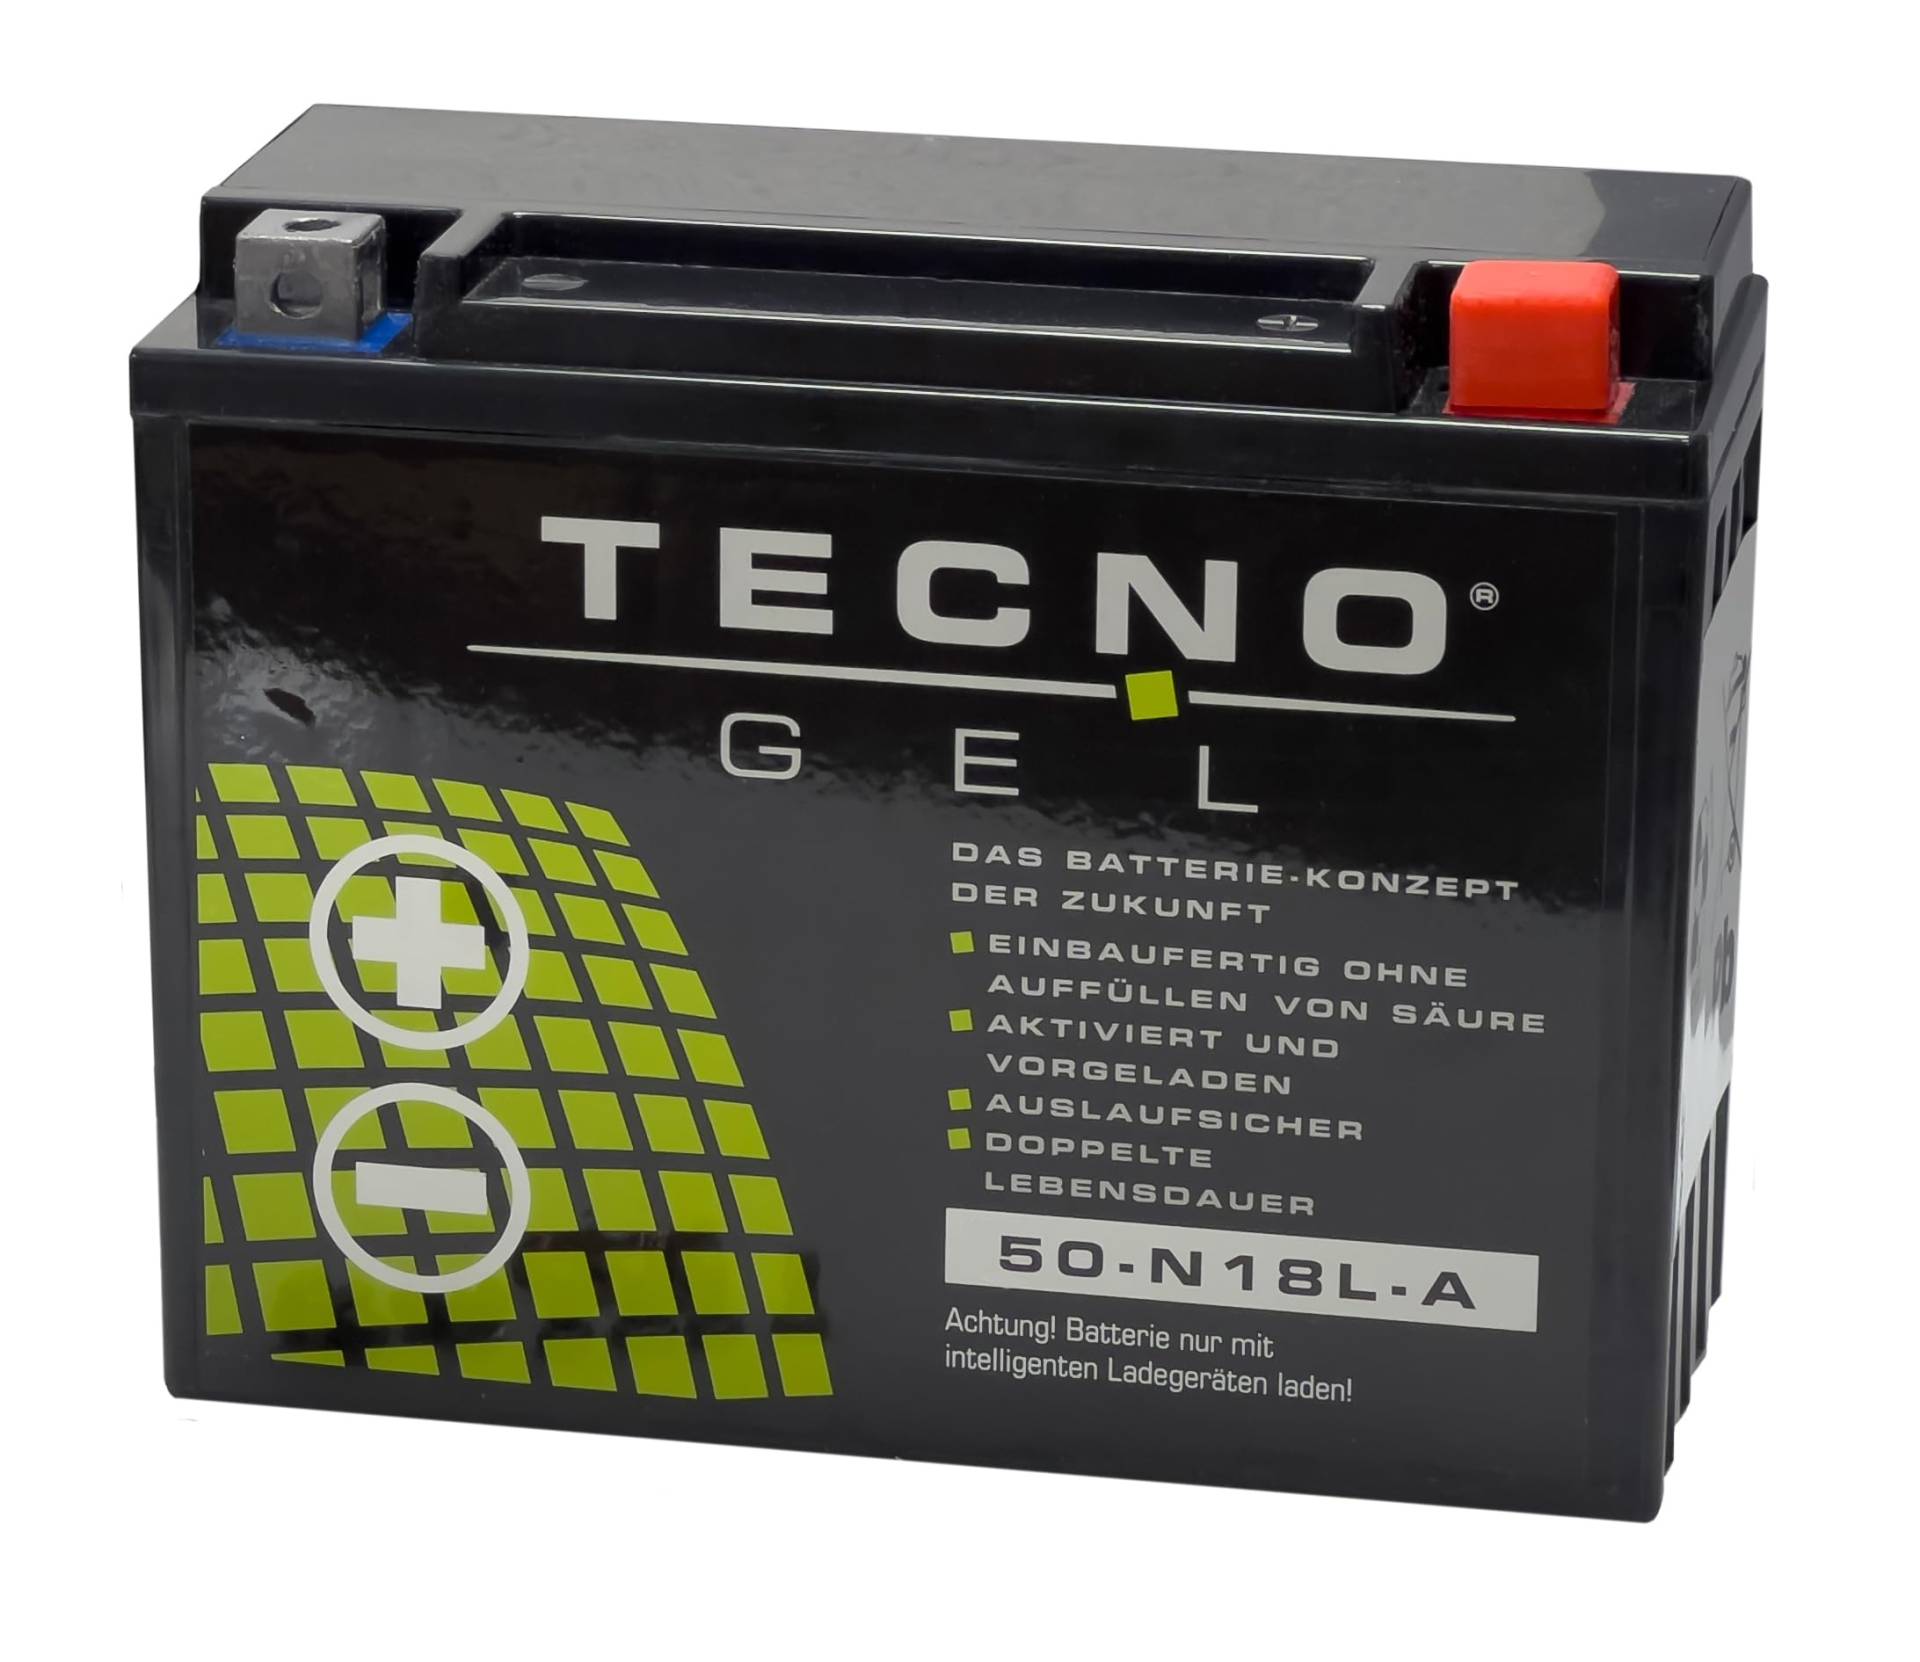 TECNO-GEL Motorrad Qualitäts Batterie Y50-N18L-A für YAMAHA XV 1000 SE, TR1, Virago 1981-1988, 12V Gel-Batterie 20 Ah (DIN 52016), 205x90x160 mm von Wirth-Federn